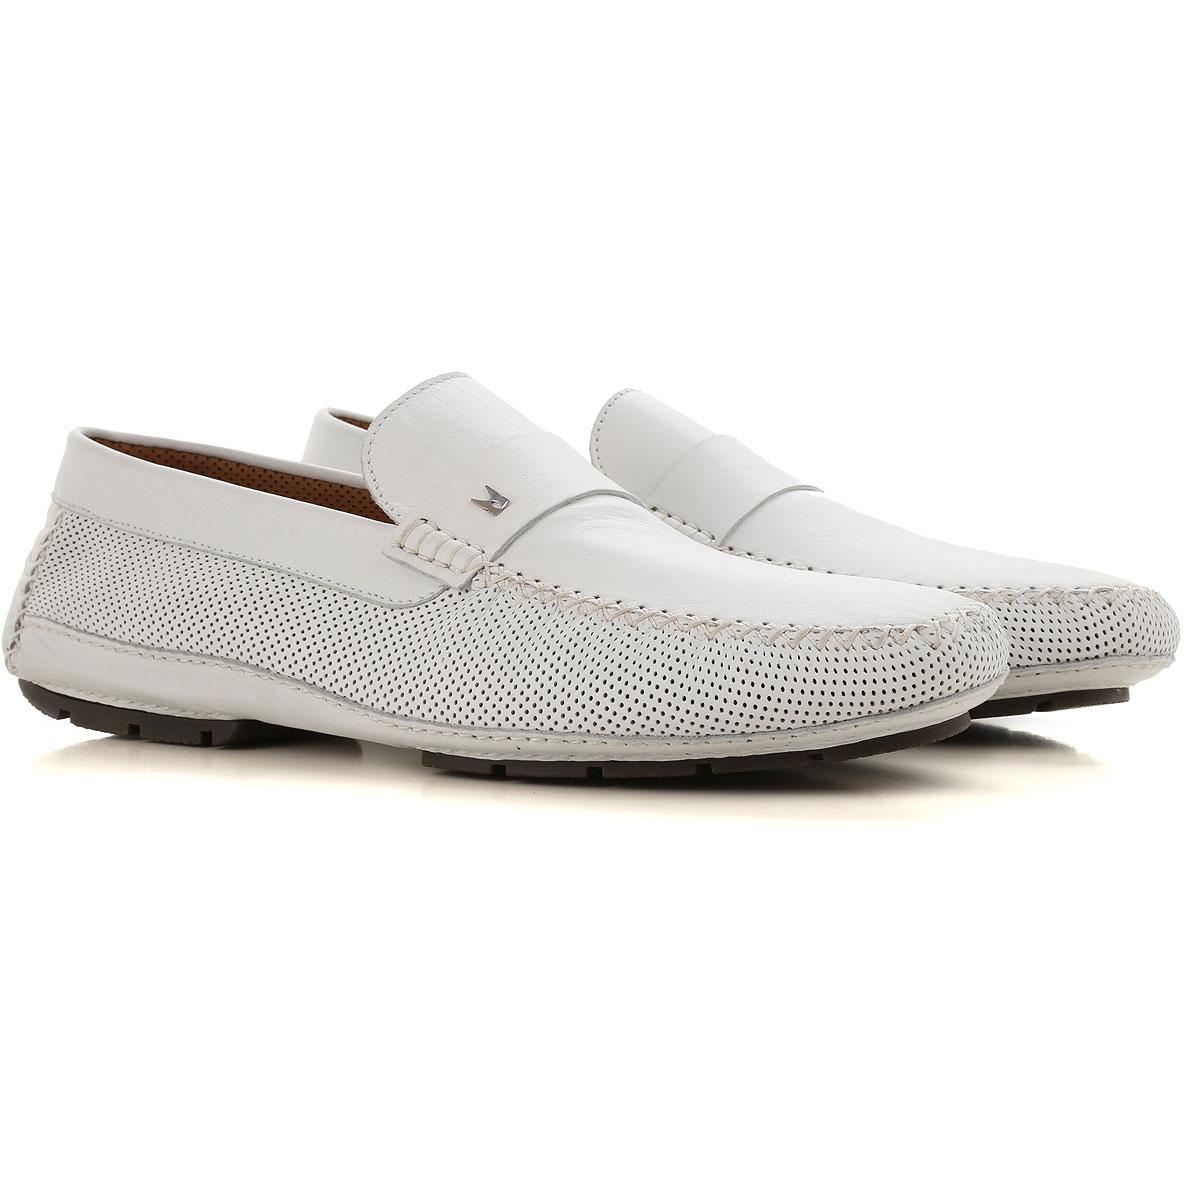 Moreschi Loafers For Men On Sale in White for Men - Lyst